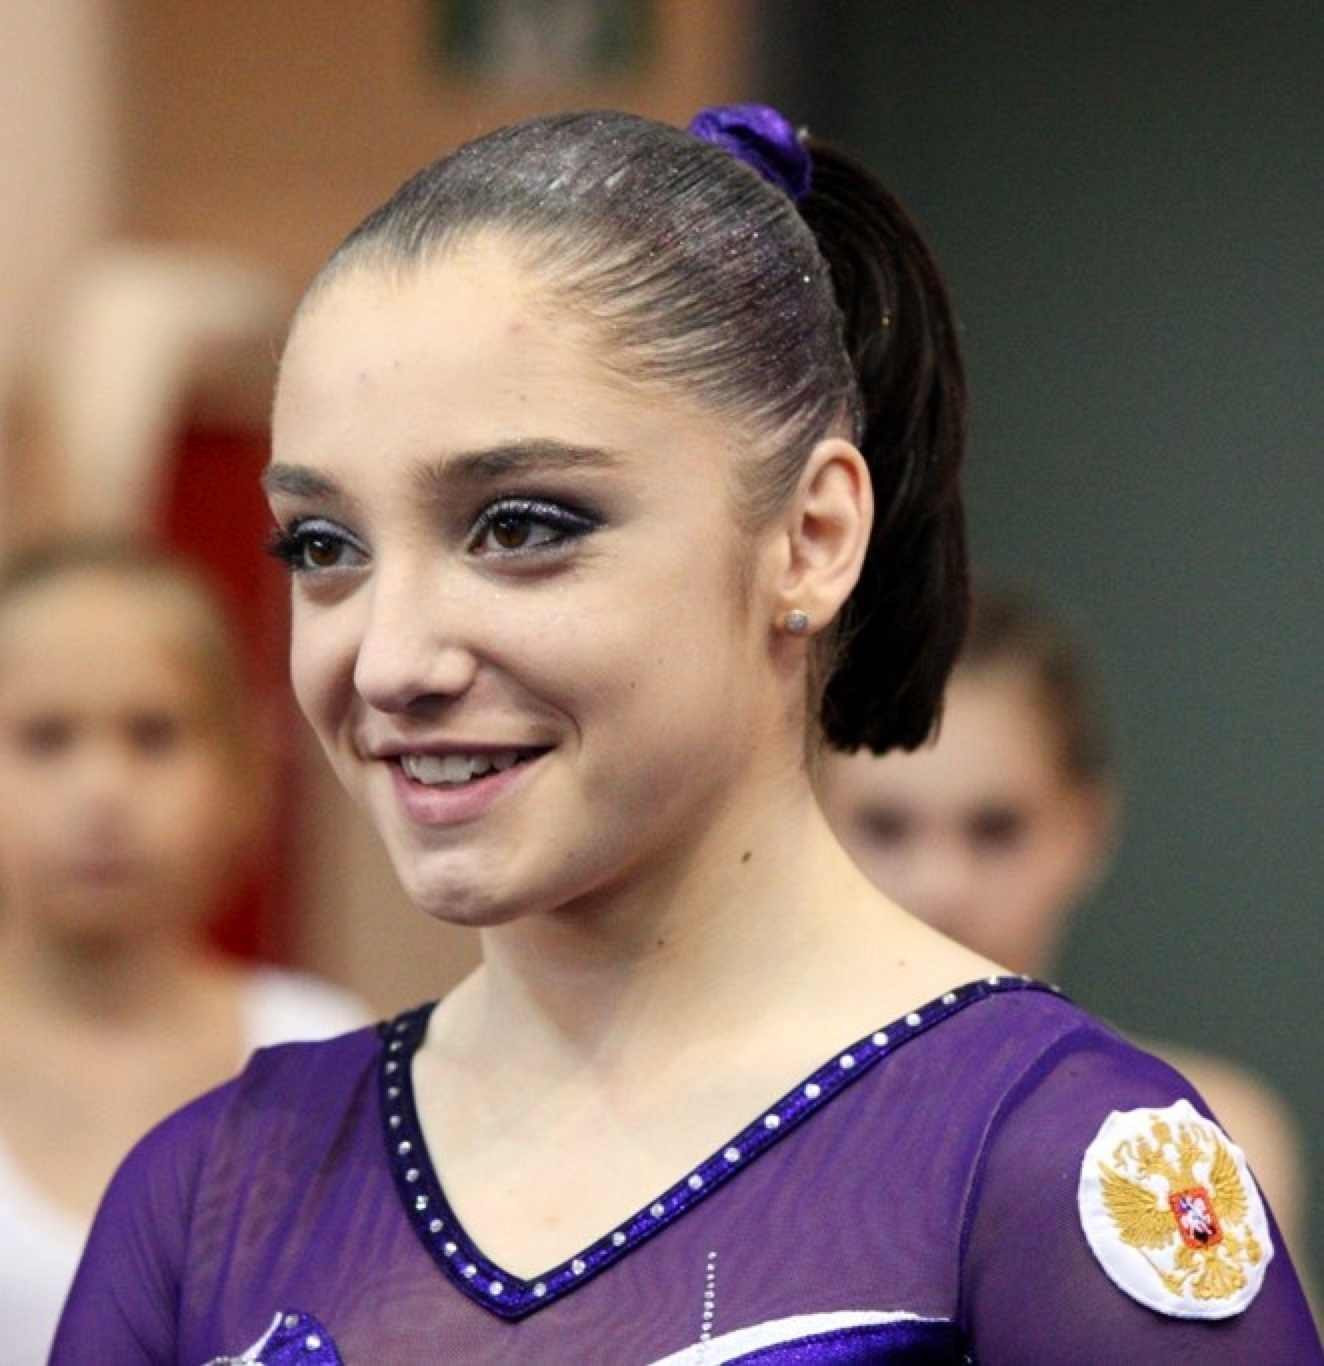 Алия Мустафина (Aliya Mustafina)